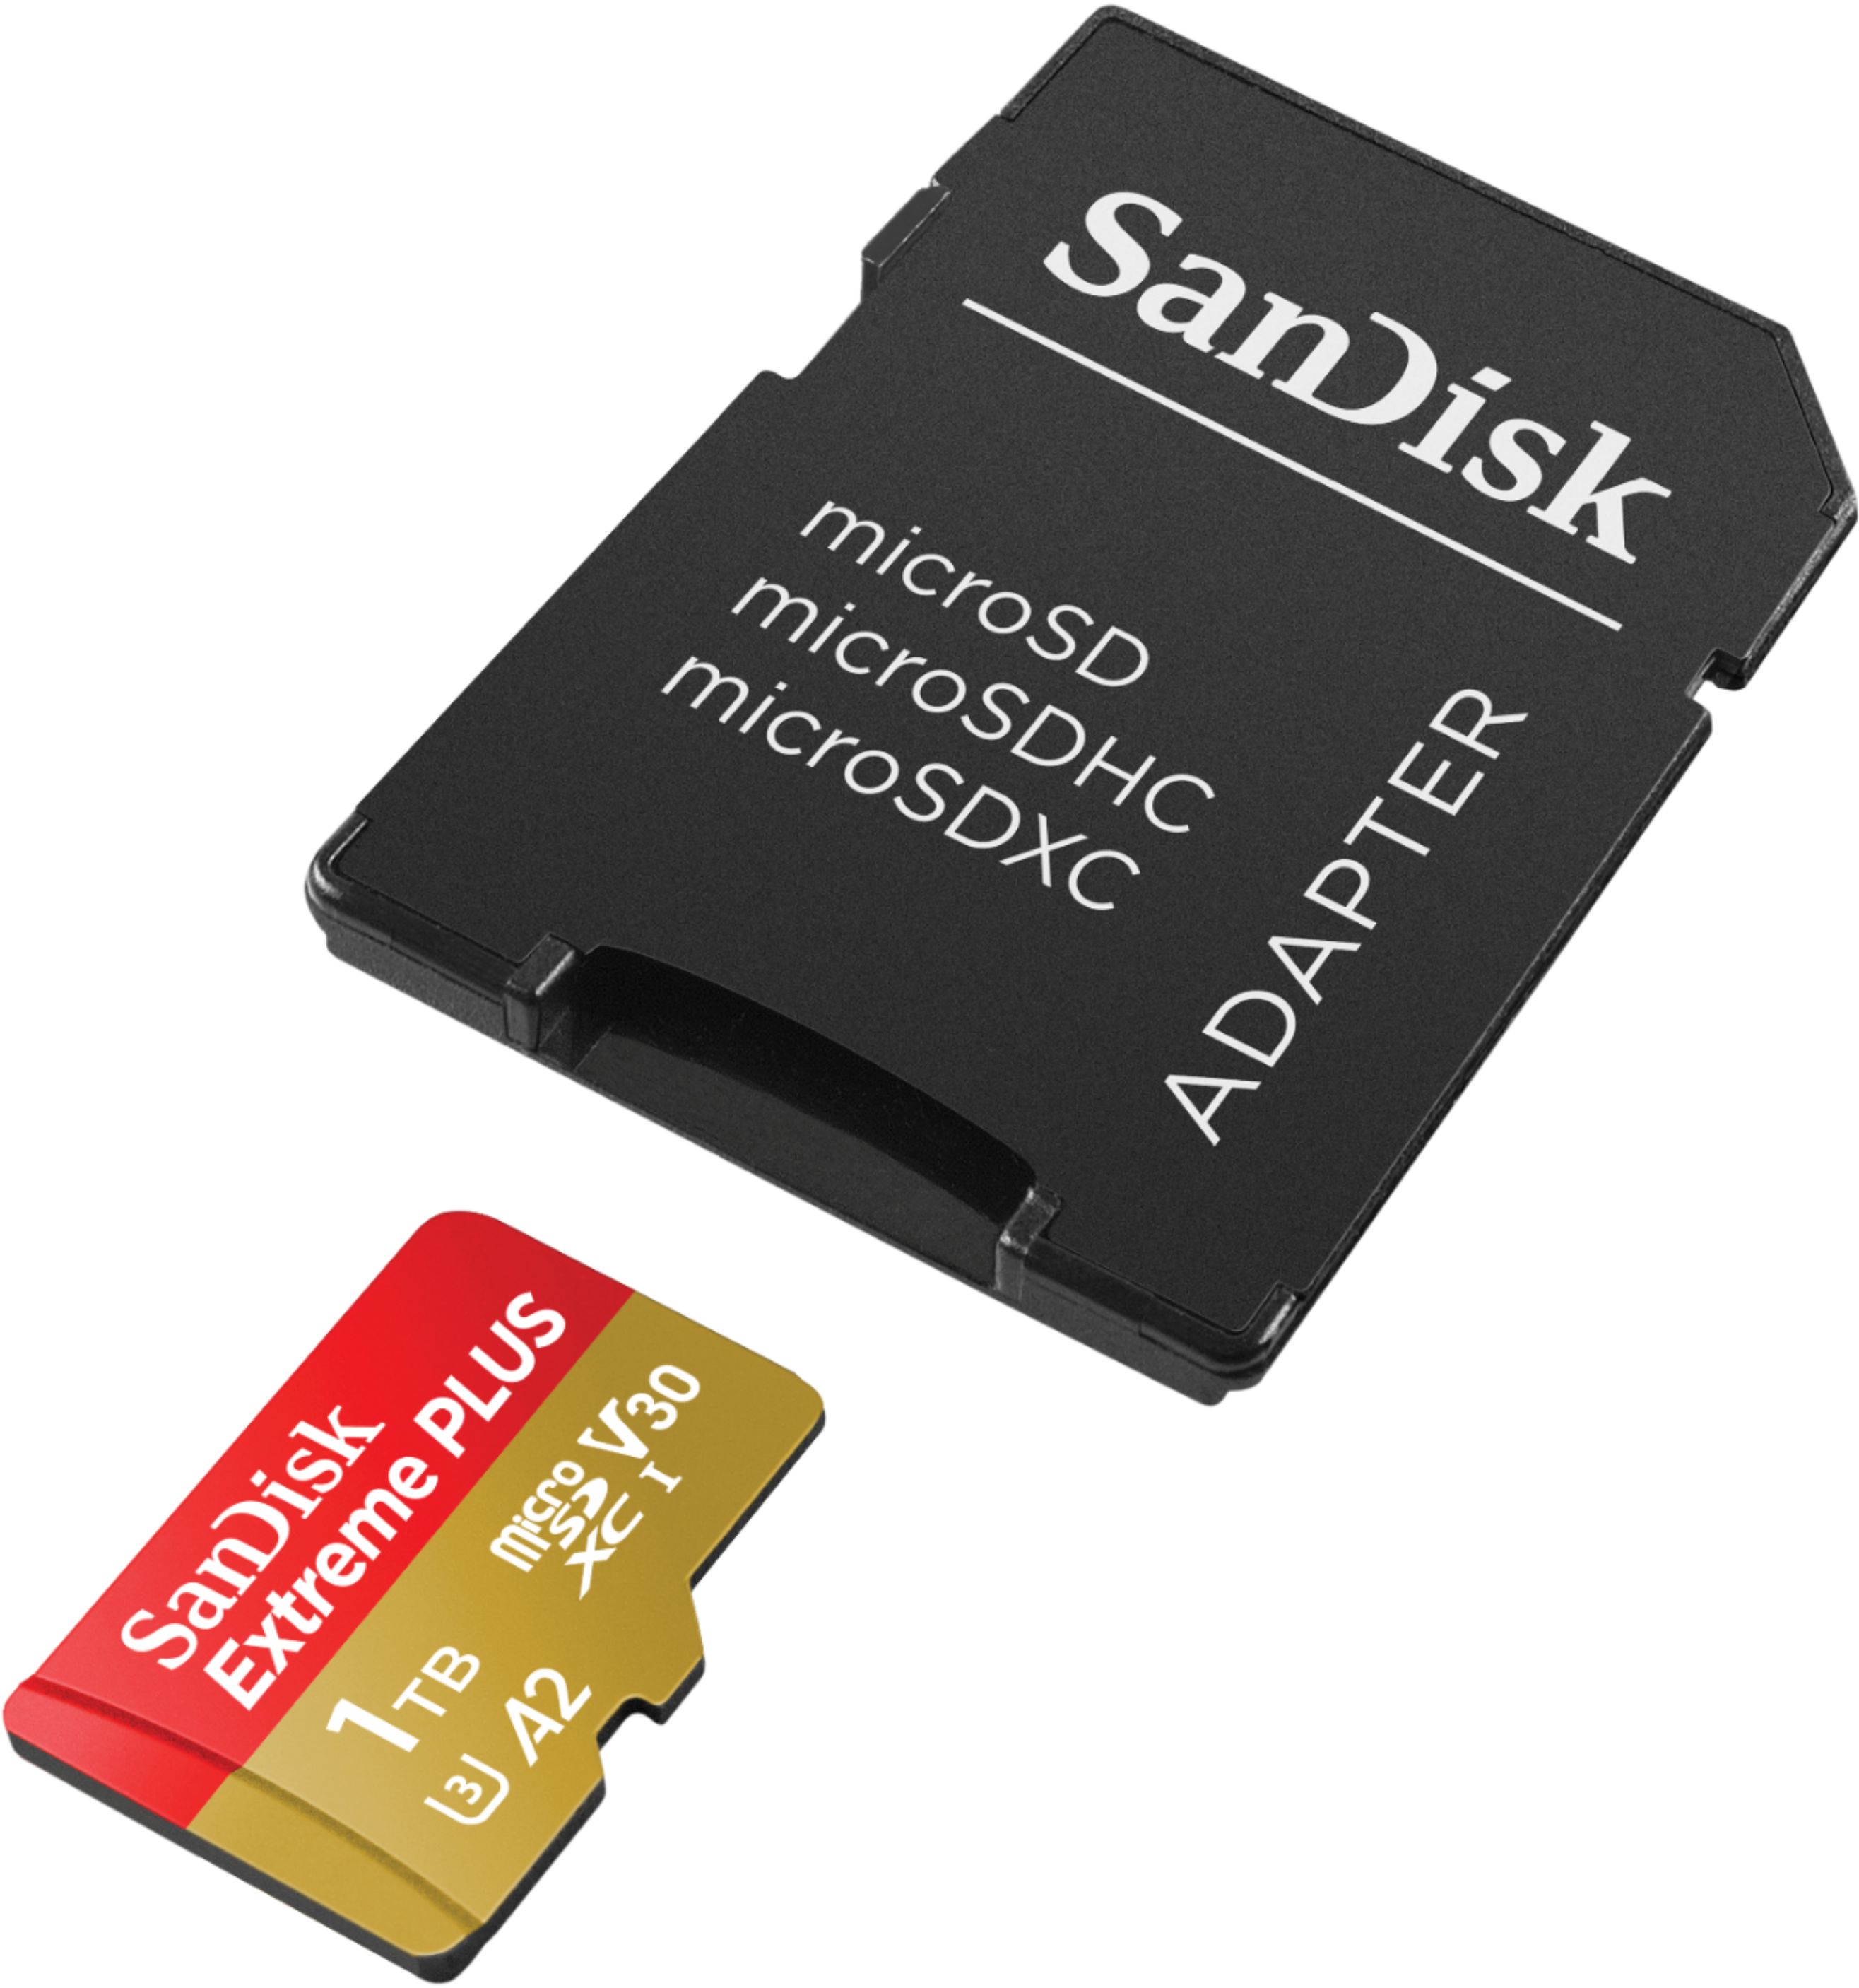 nintendo switch 1 terabyte sd card